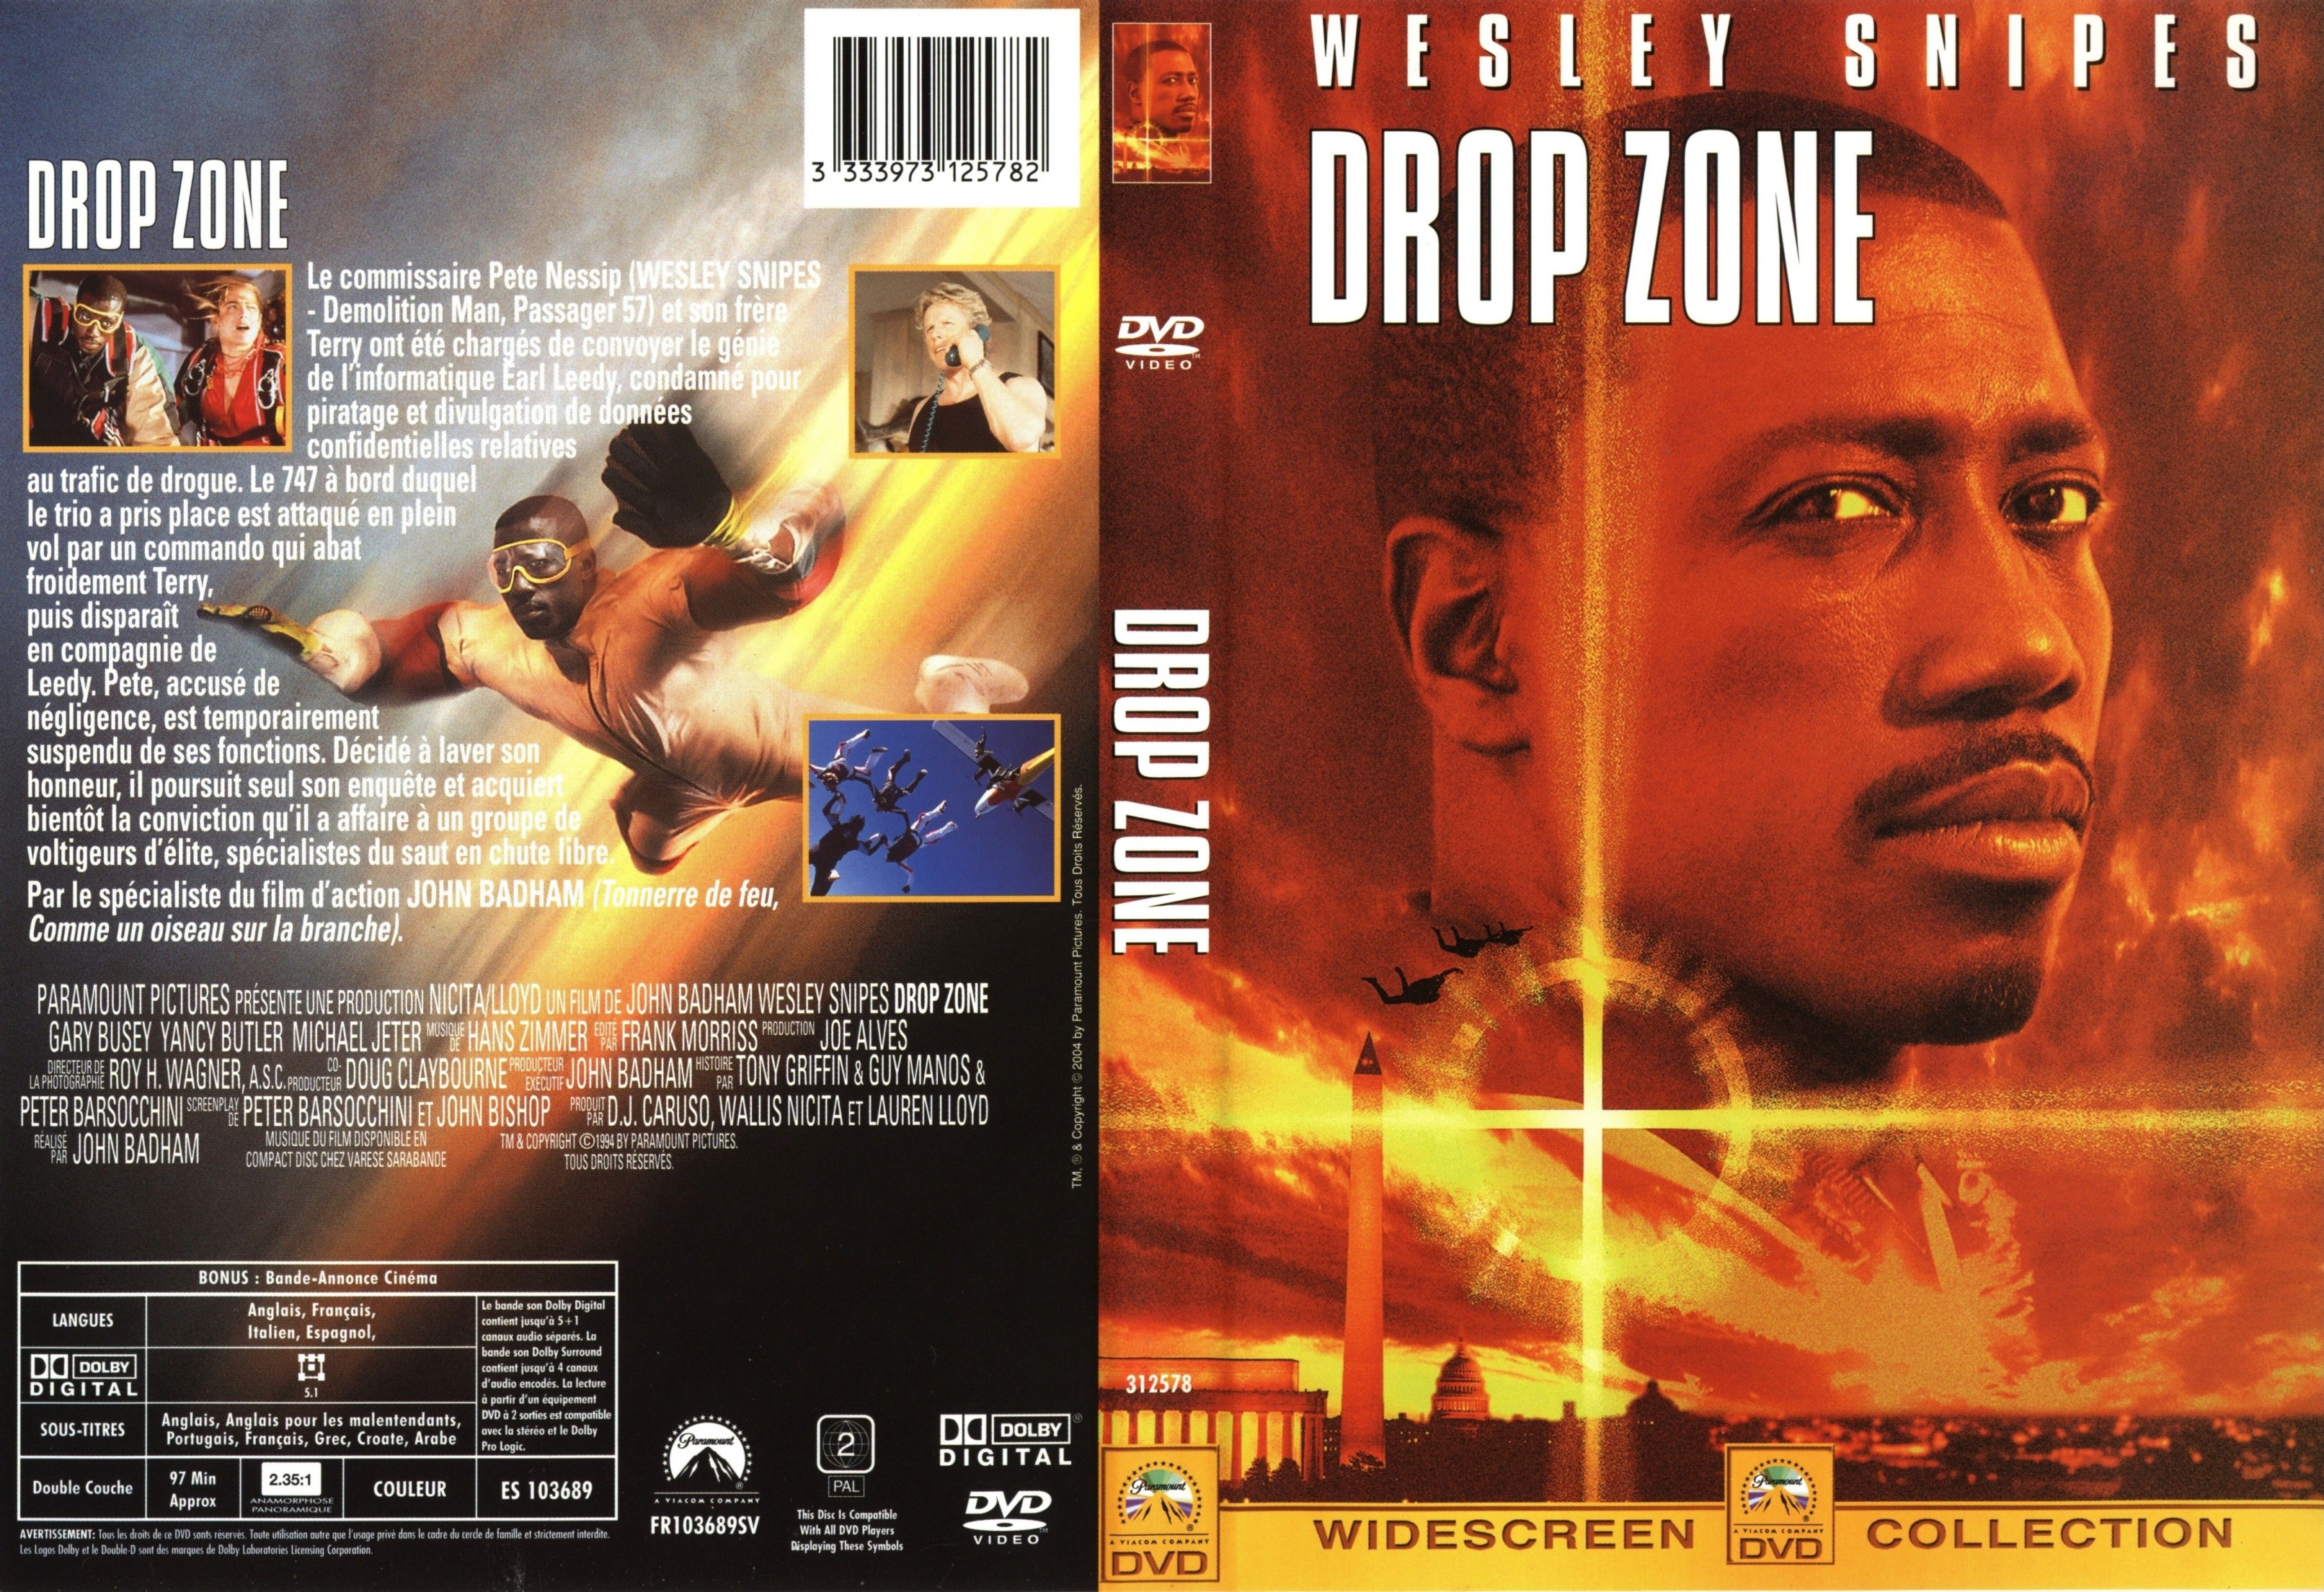 Jaquette DVD Drop zone